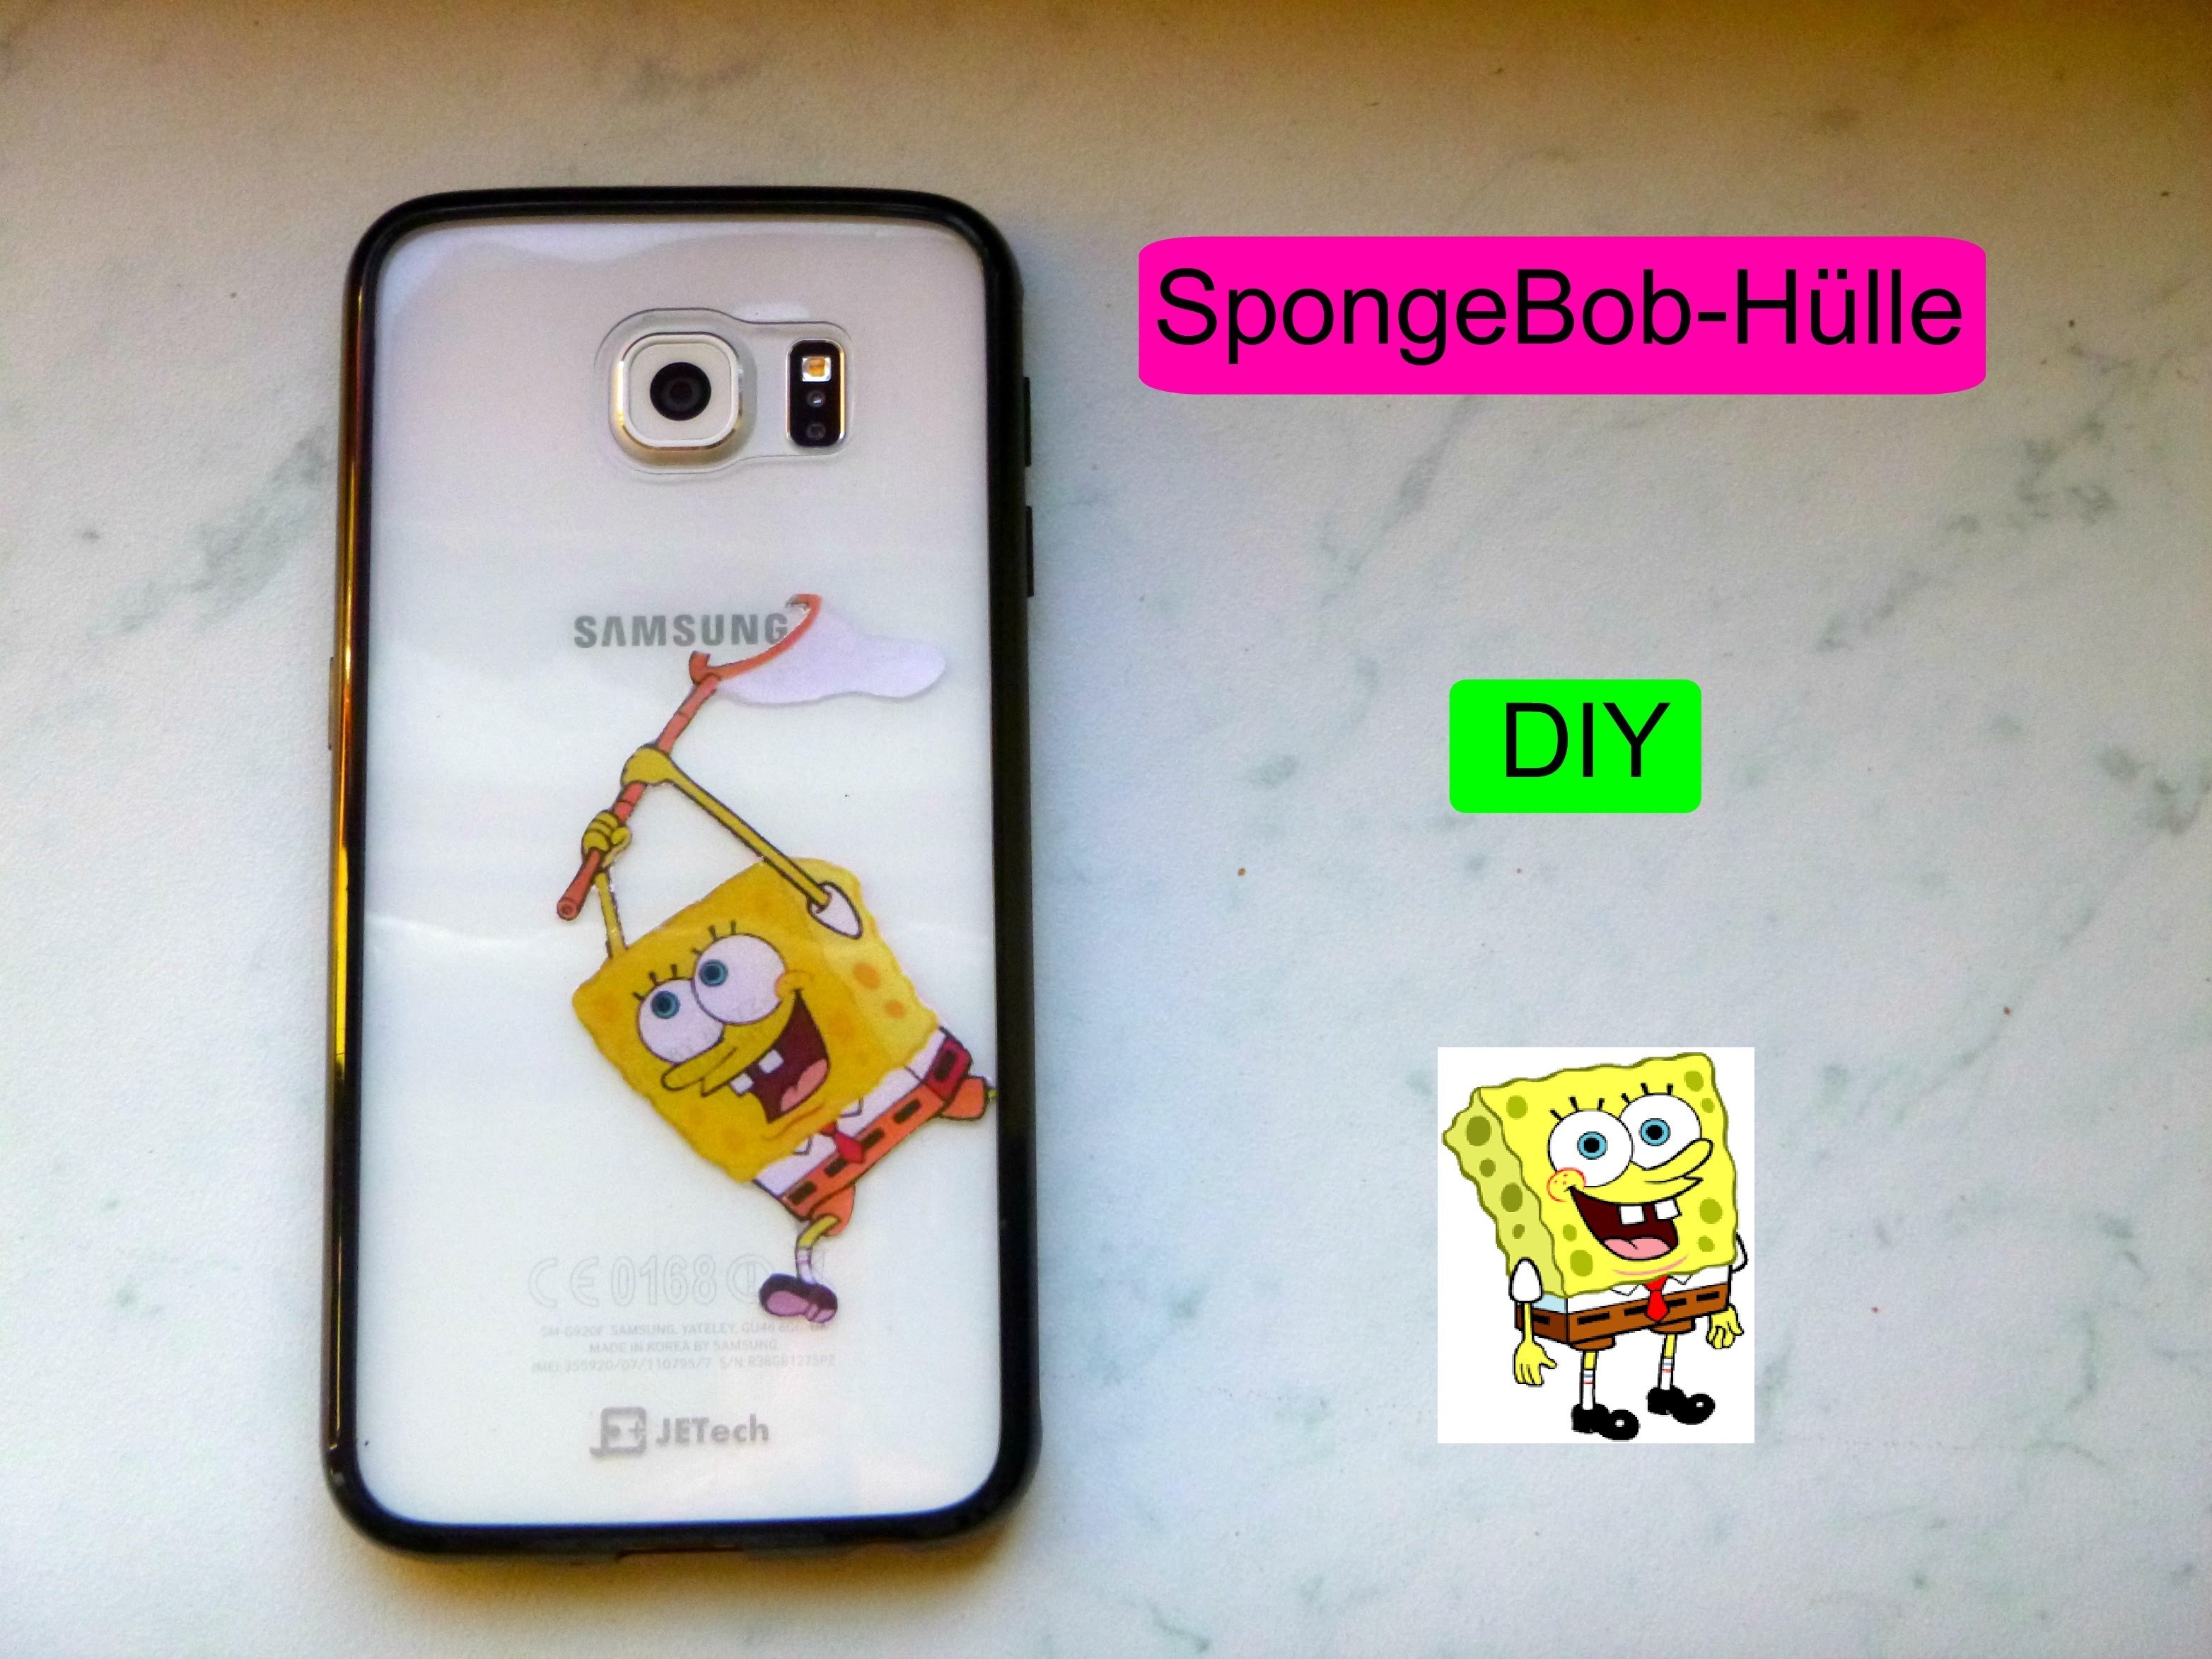 SpongeBob-fängt-Samsung-Hülle - DIY